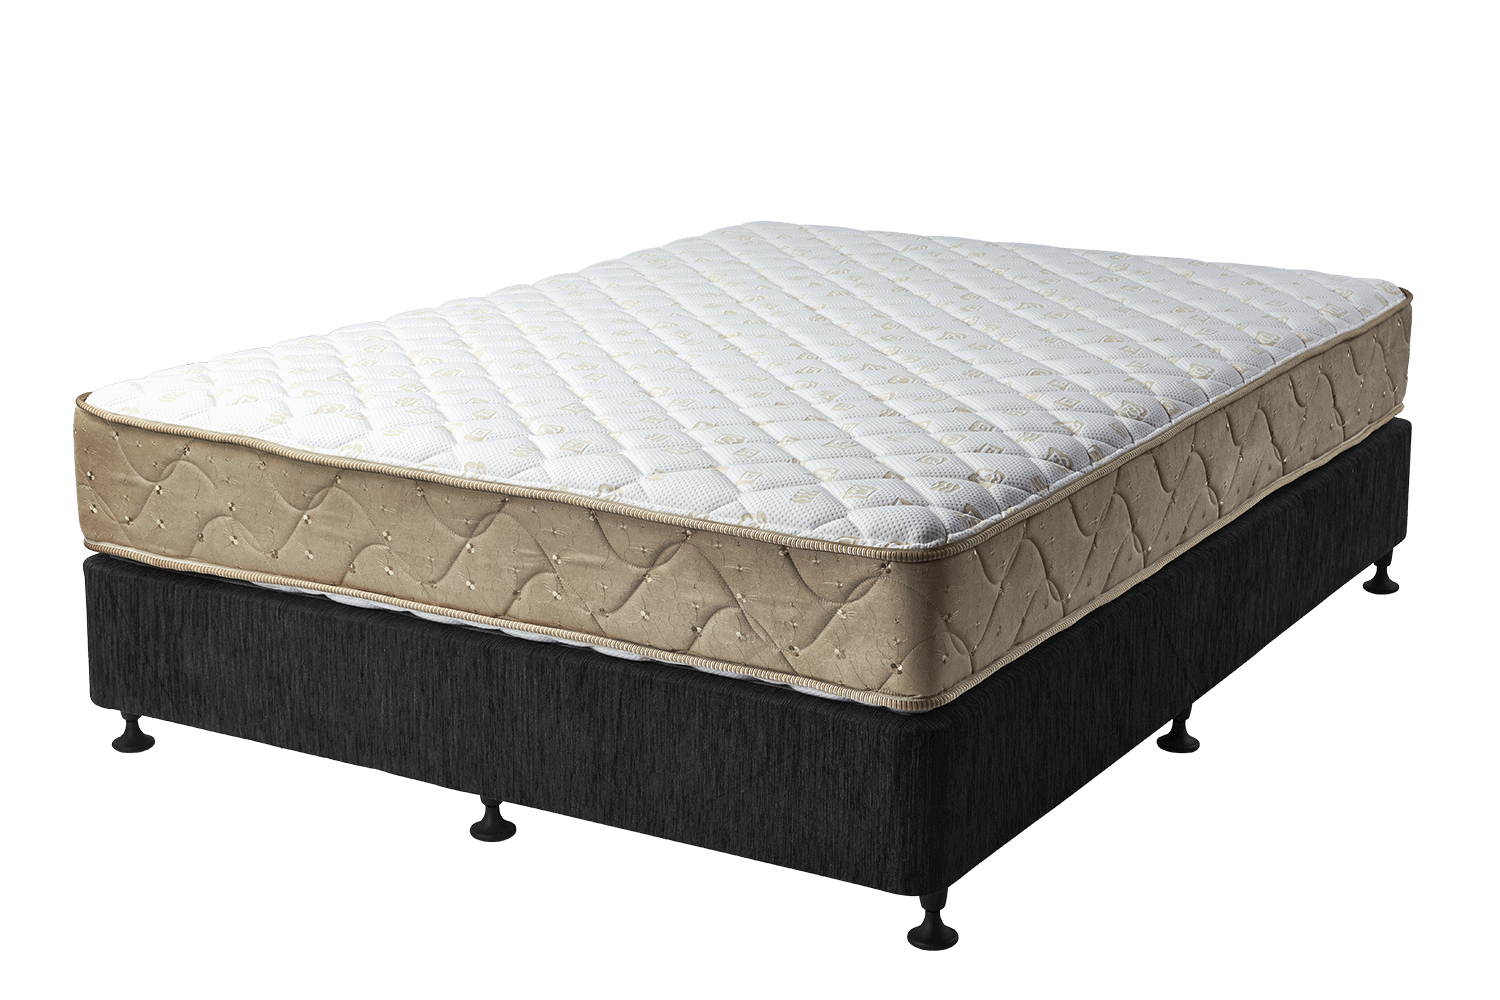 mattresses for sale in aventura fl